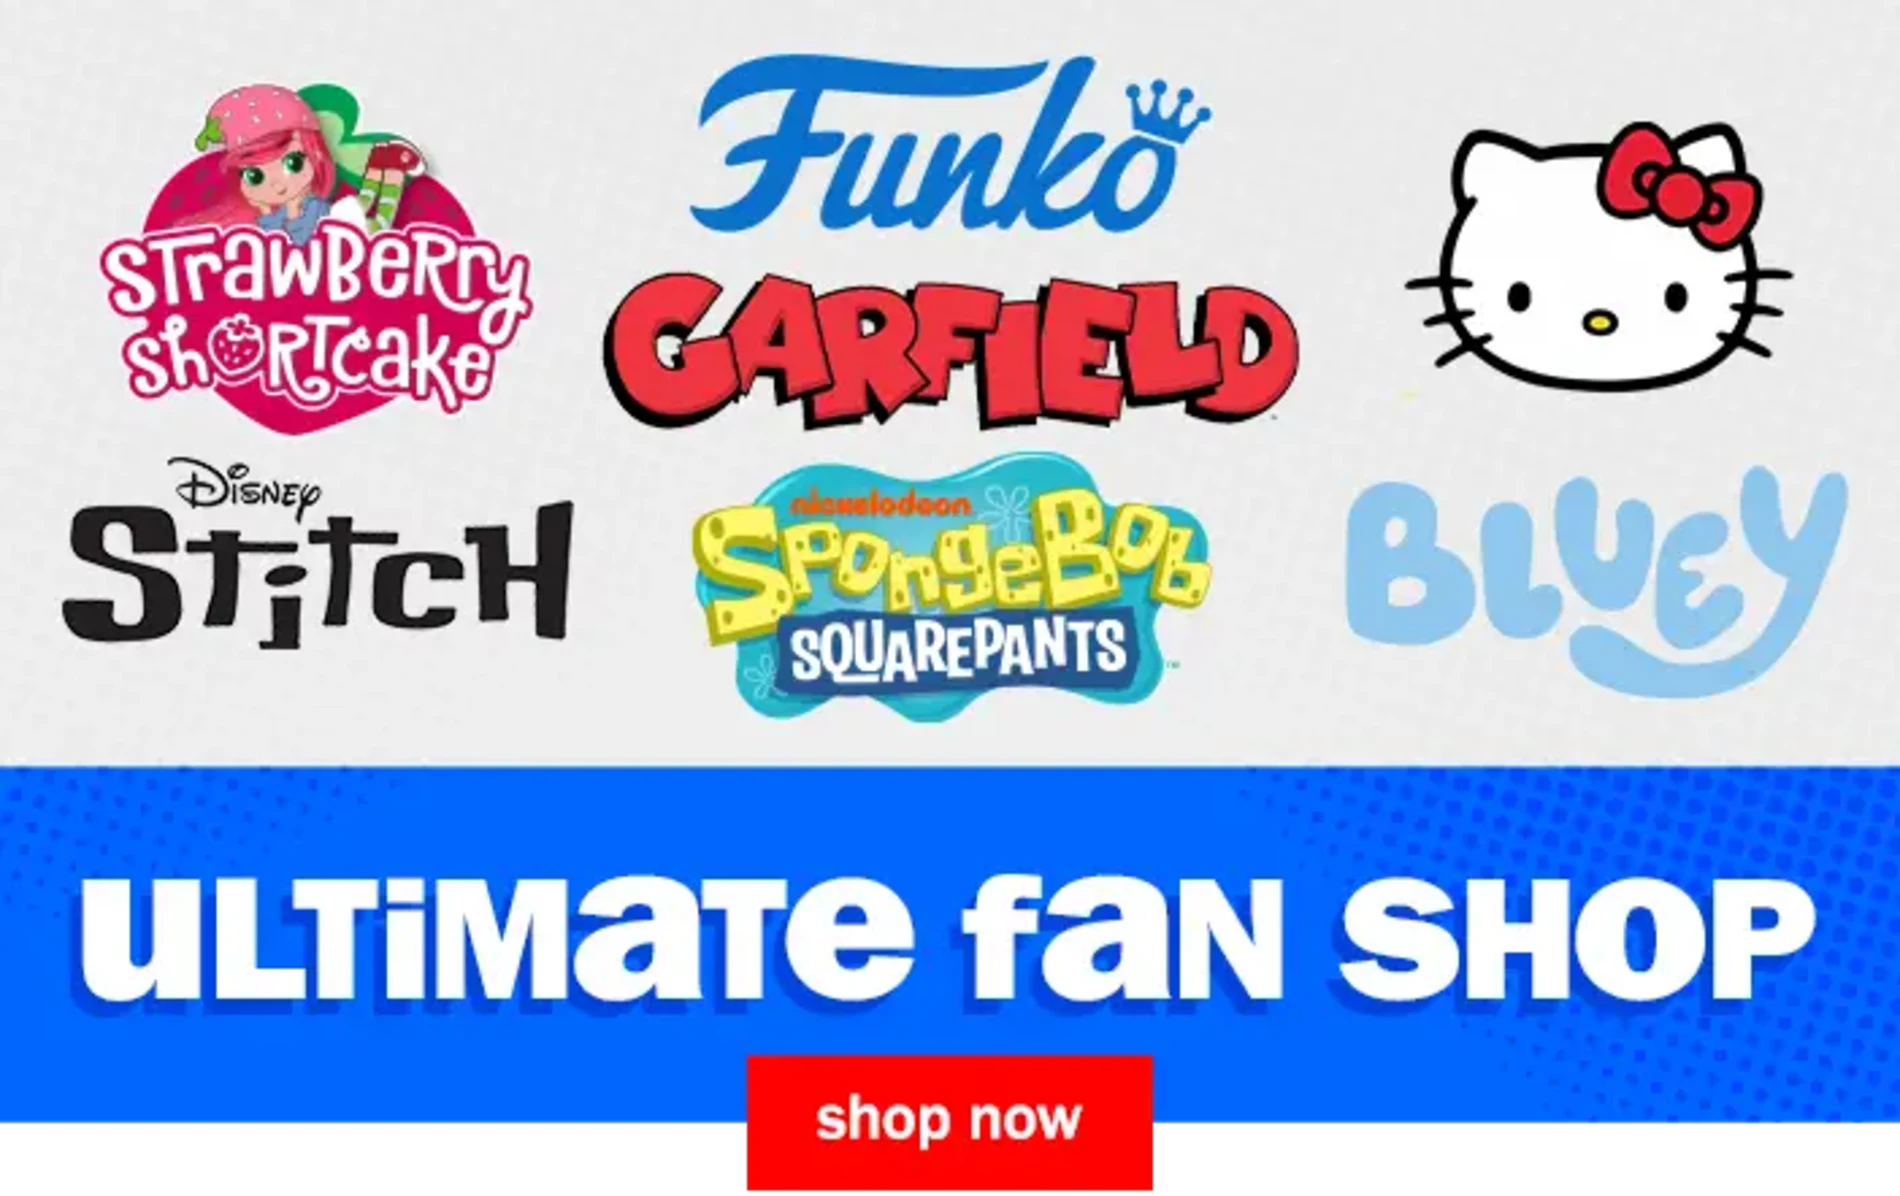 Ultimate Fan Shop. Shop Now. Strawberry Shortcake, Garfield, Funko, Hello Kitty, Disney Stitch, Nickelodeon Spongebob Squarepants, Bluey